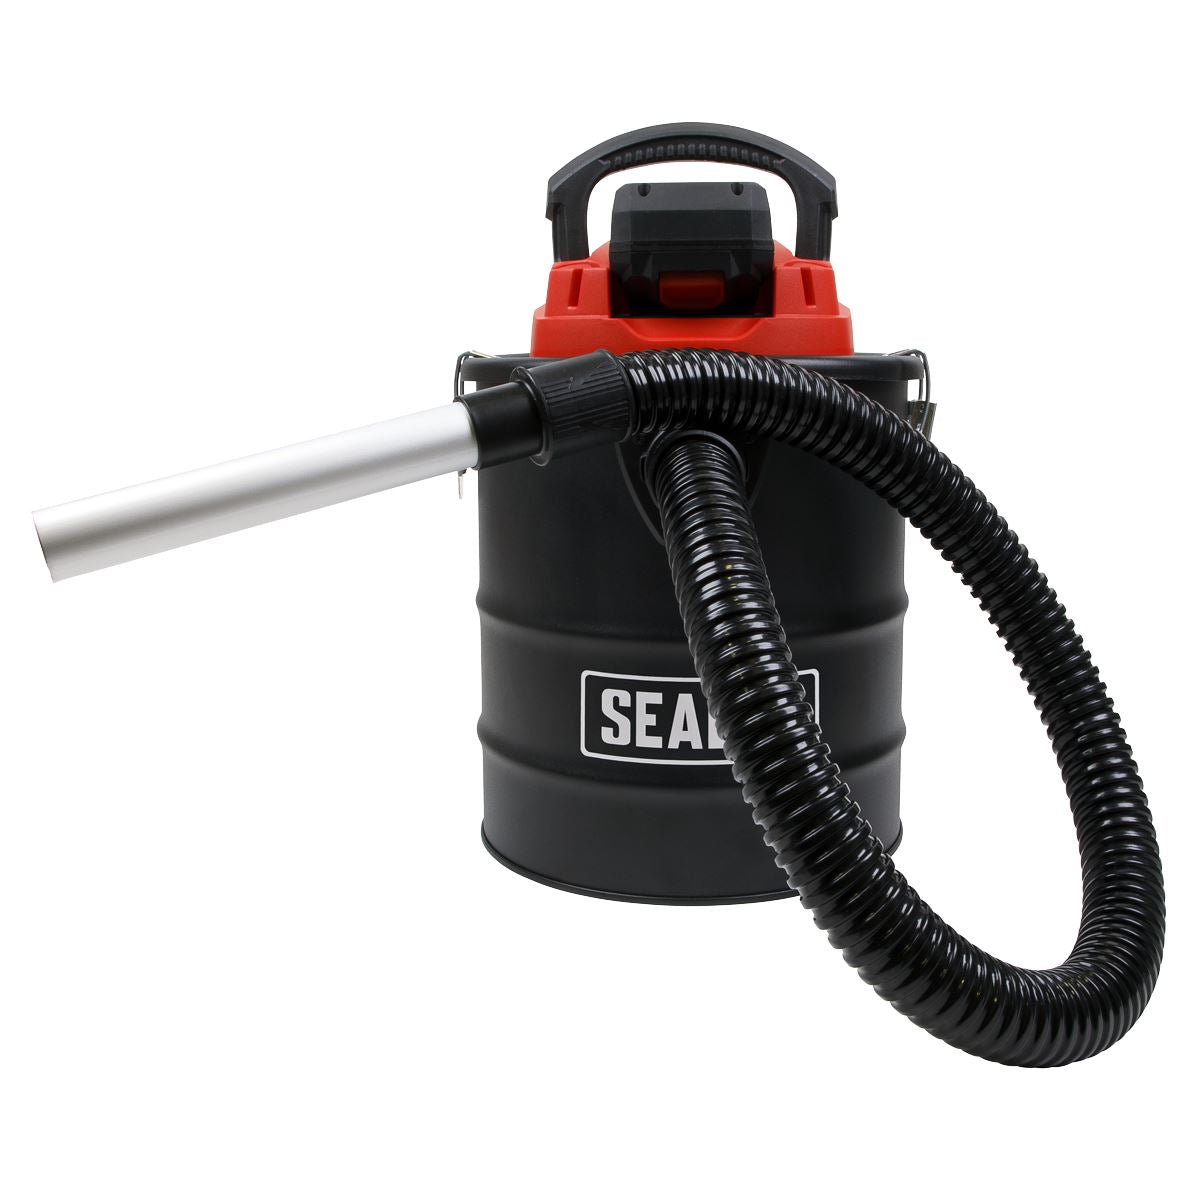 Sealey Handheld Ash Vacuum Cleaner 20V SV20 Series 15L CP20VAV